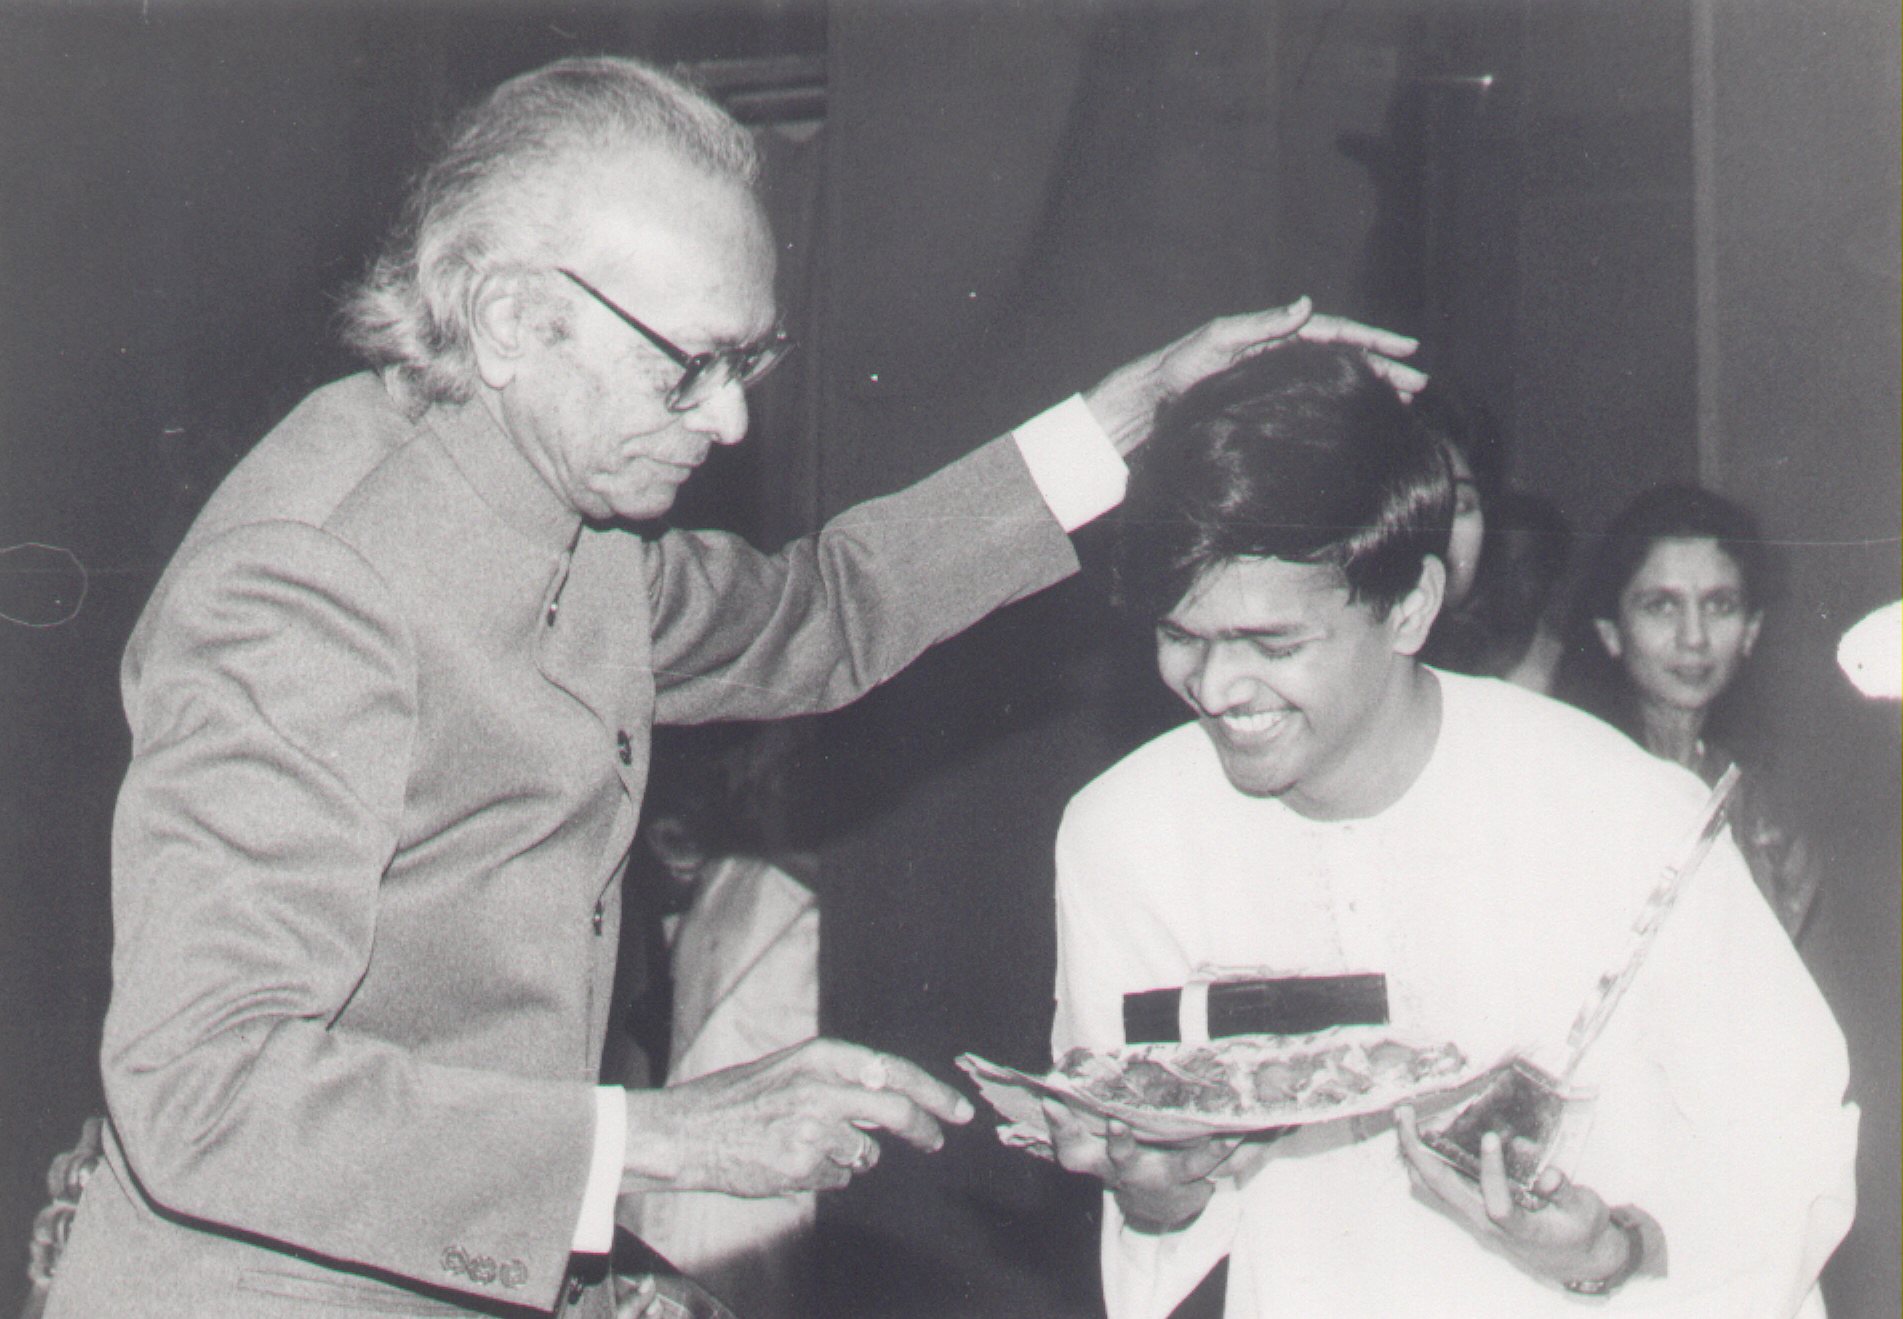 Receiving award from Naushad Ji